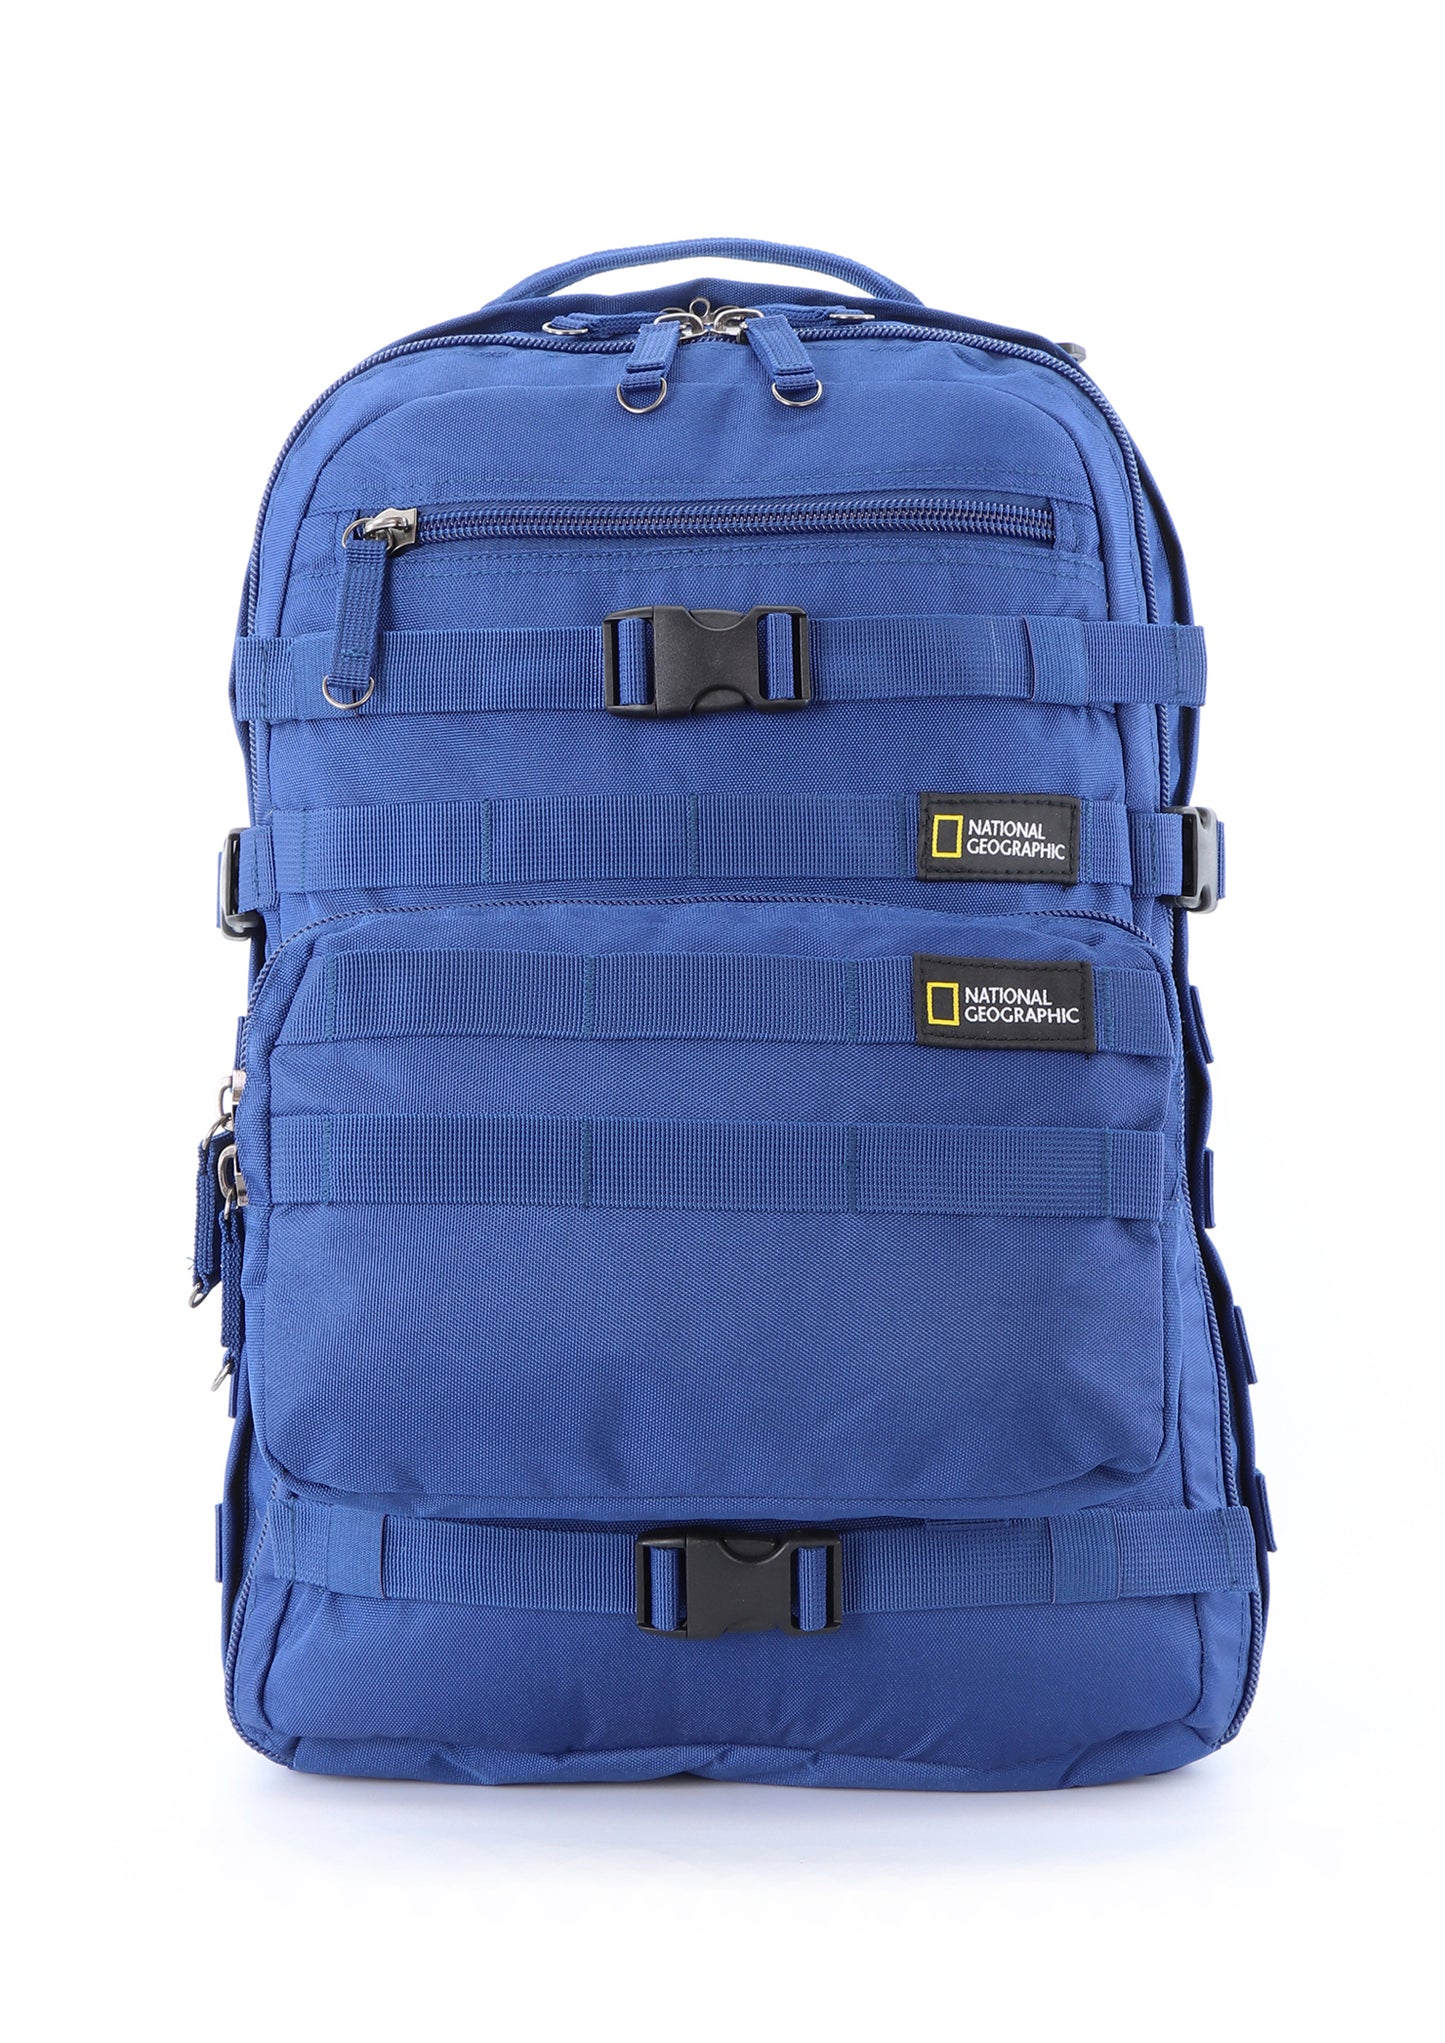 National Geographic Rocket - Voorkant Outdoor laptop Blauw rugzak | luggage4u.be